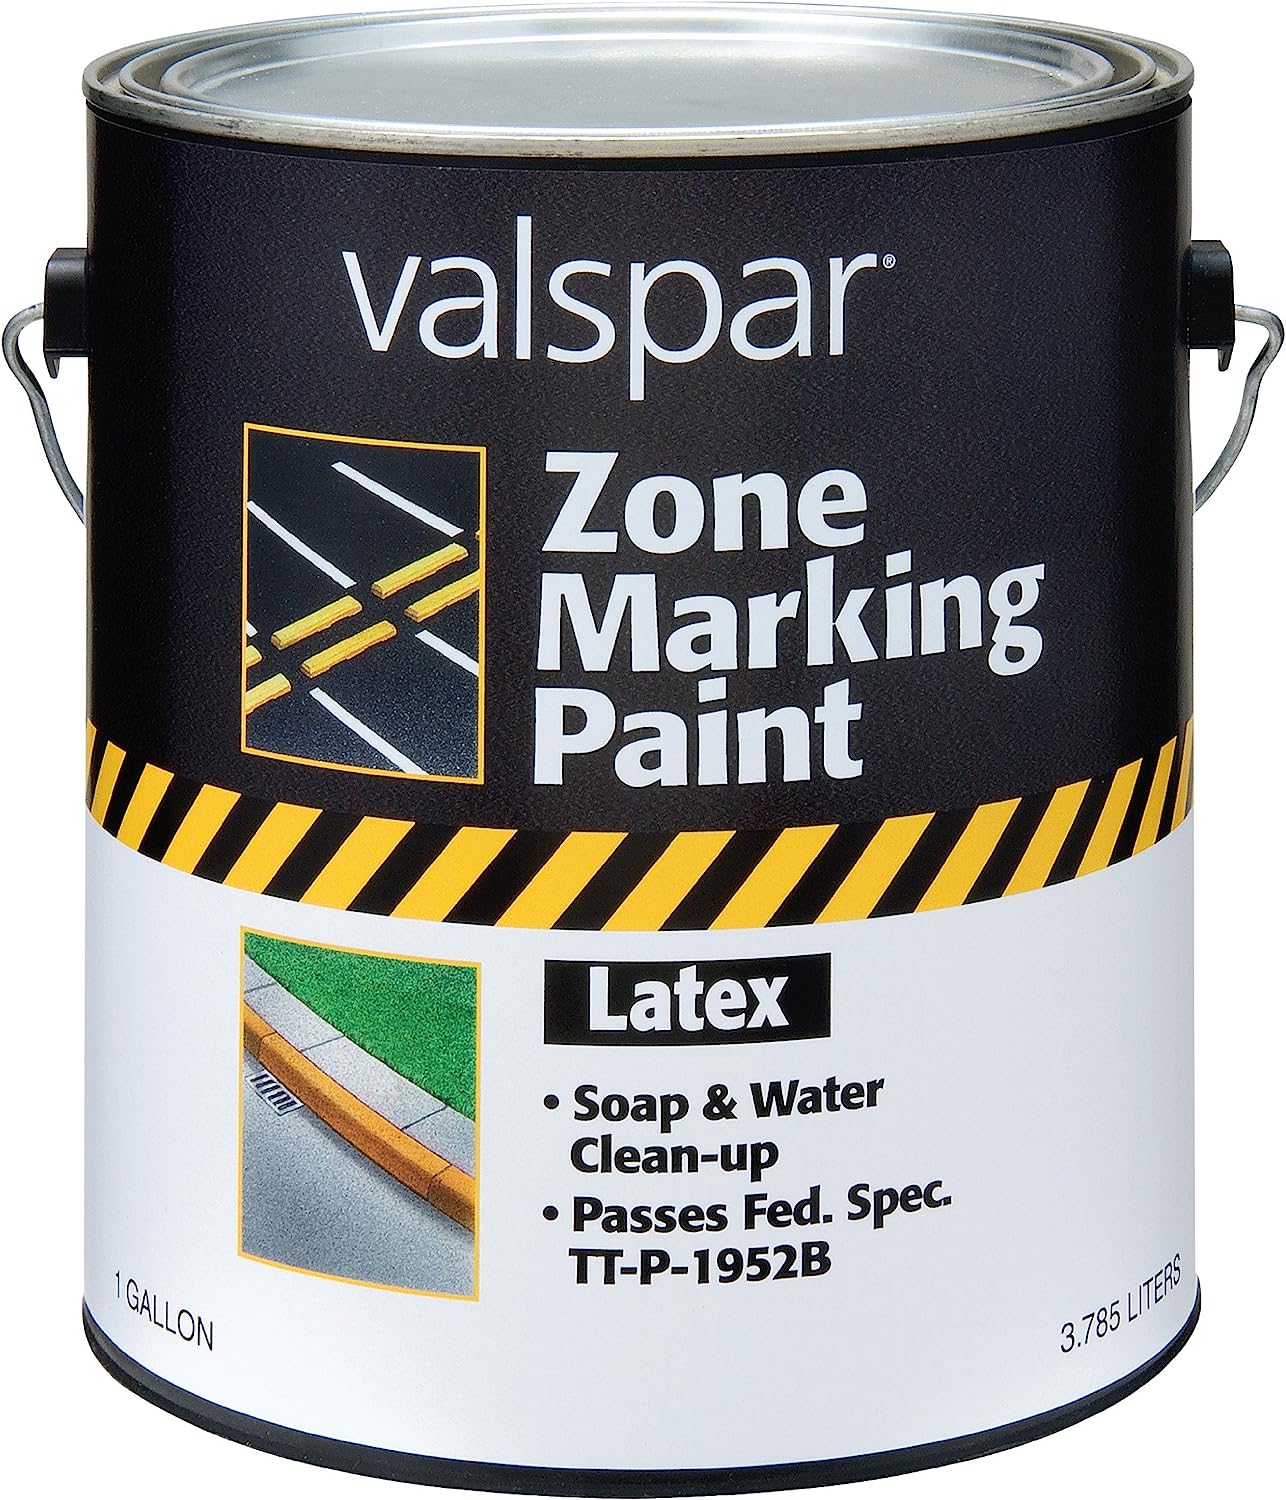 Valspar 24-137G Blue Latex Zone Marking Paint - 1 Gallon